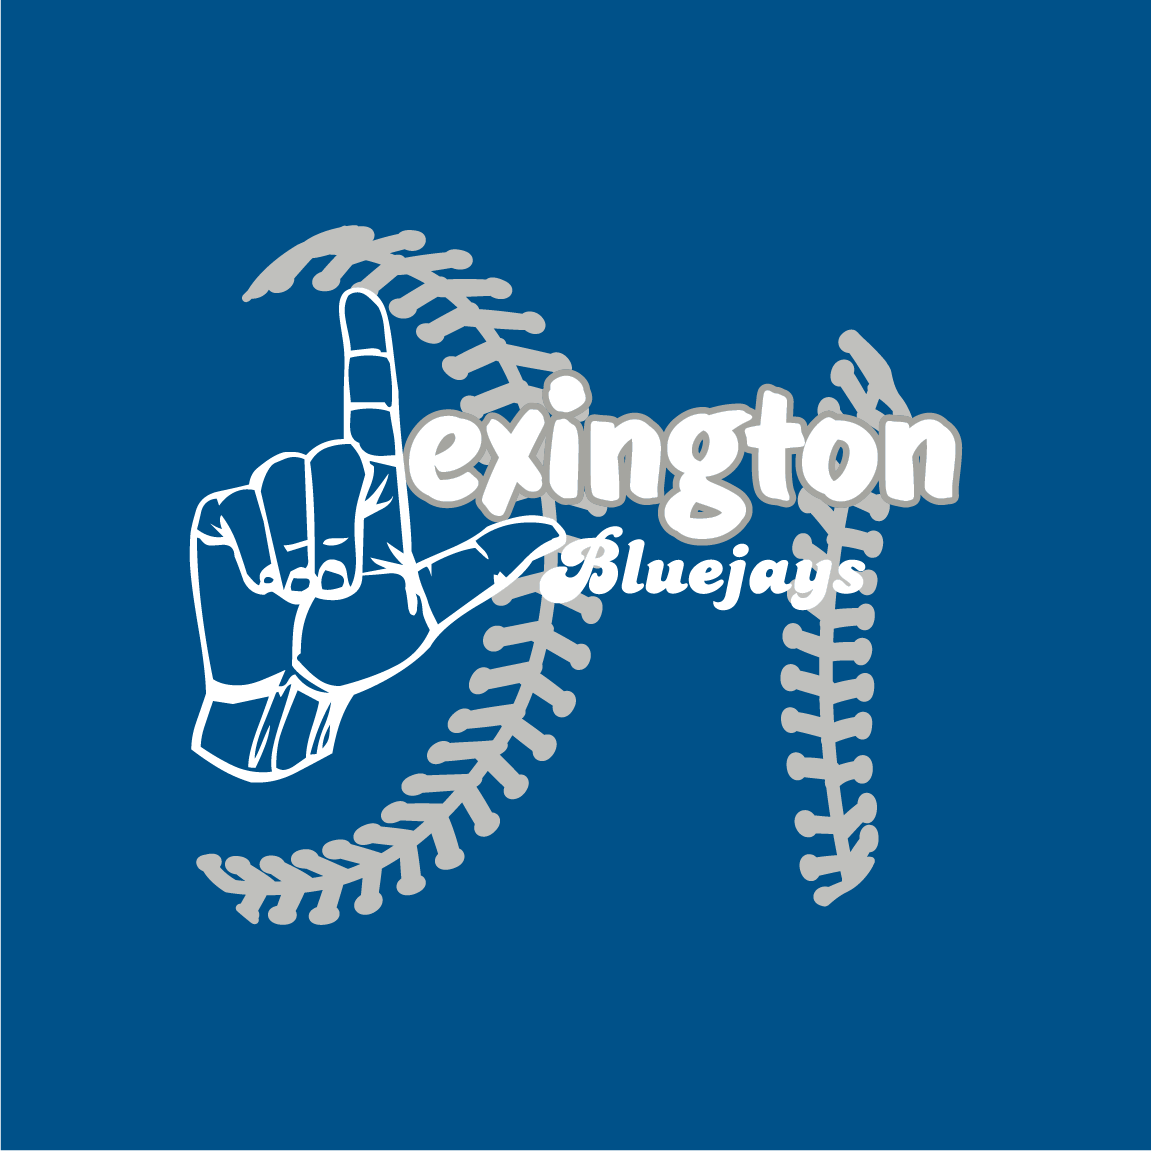 Softball at Lexington! shirt design - zoomed